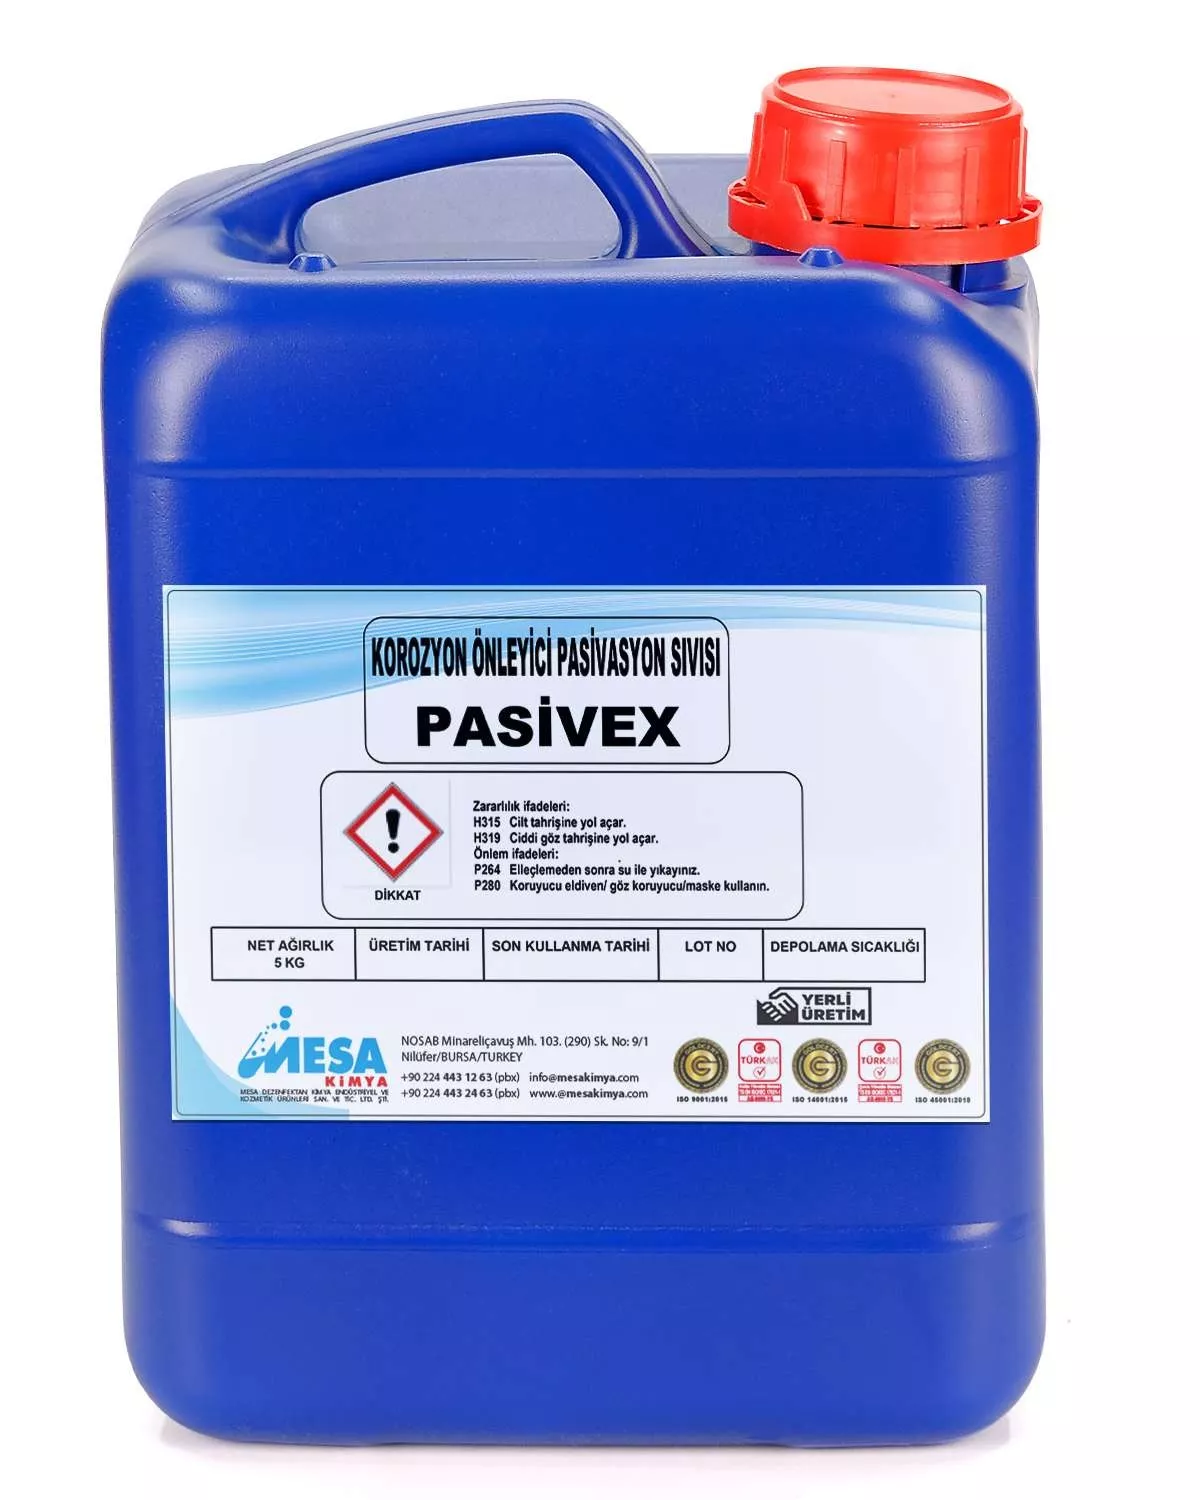 Pasivasyon kimyasalları Pasivex